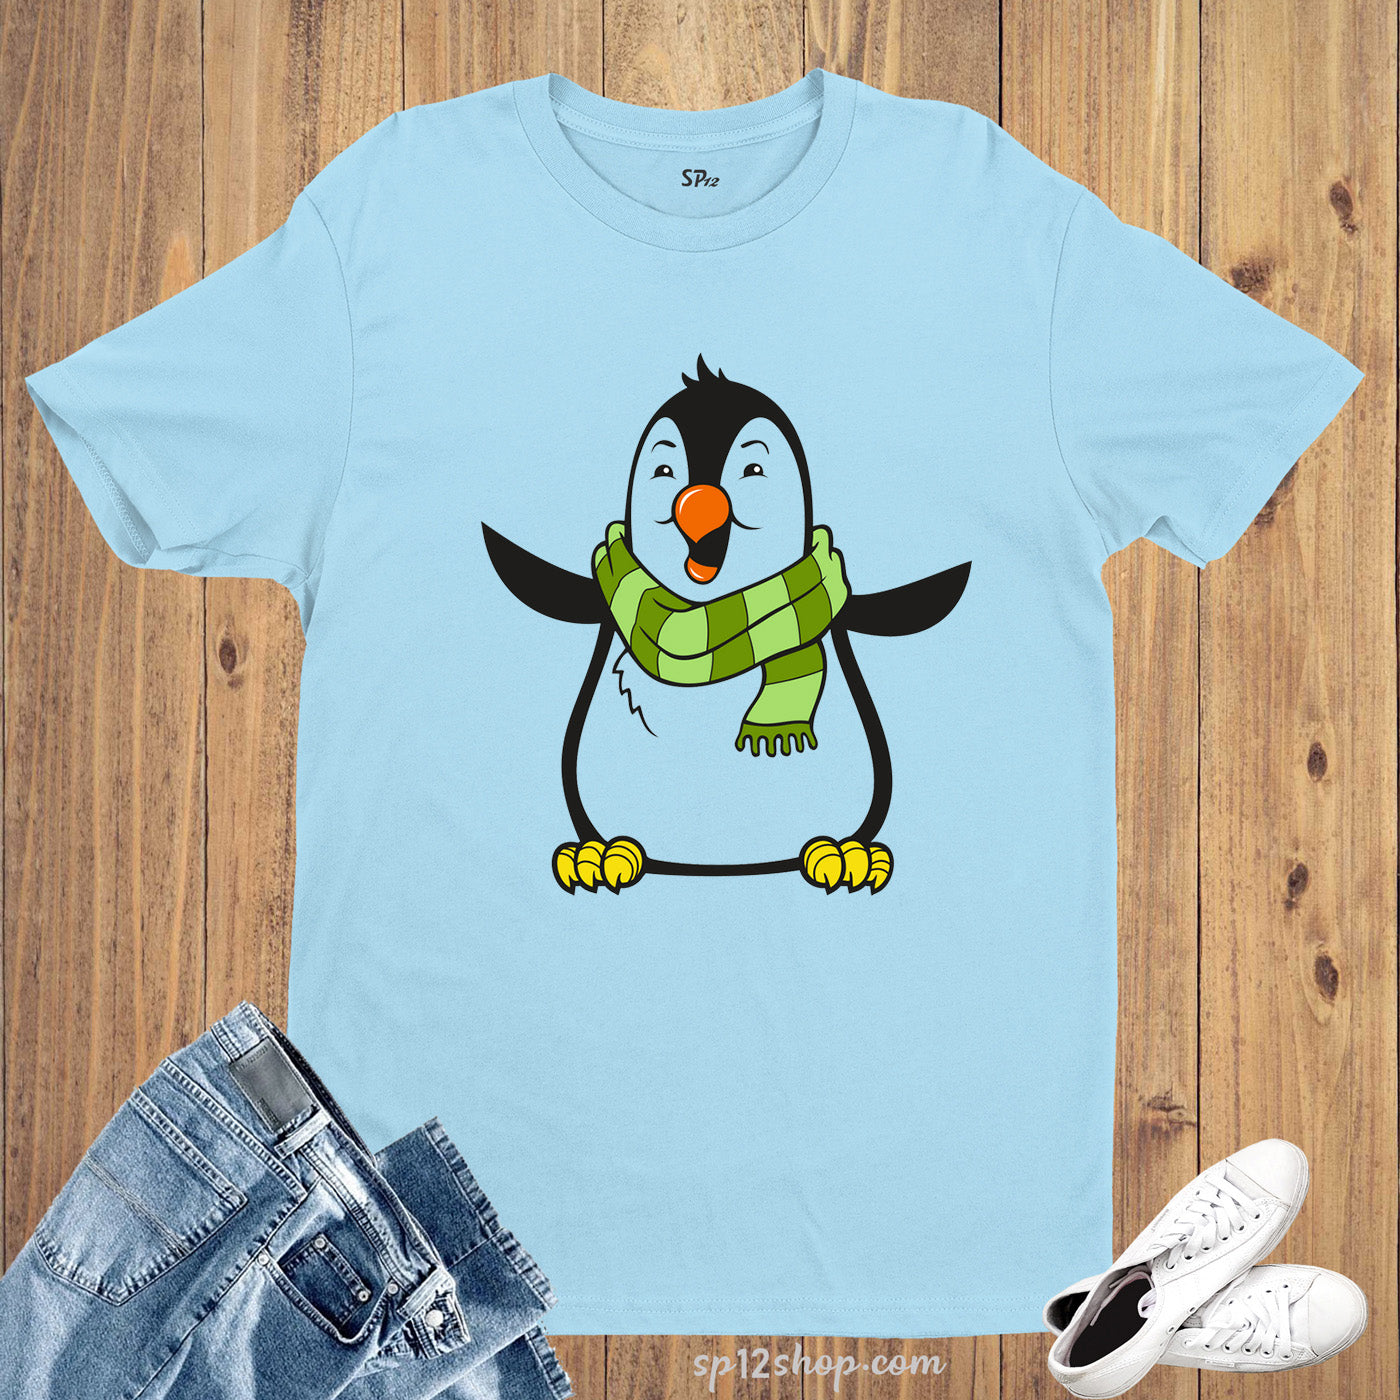 Cute Penguin Animal Graphic T Shirt